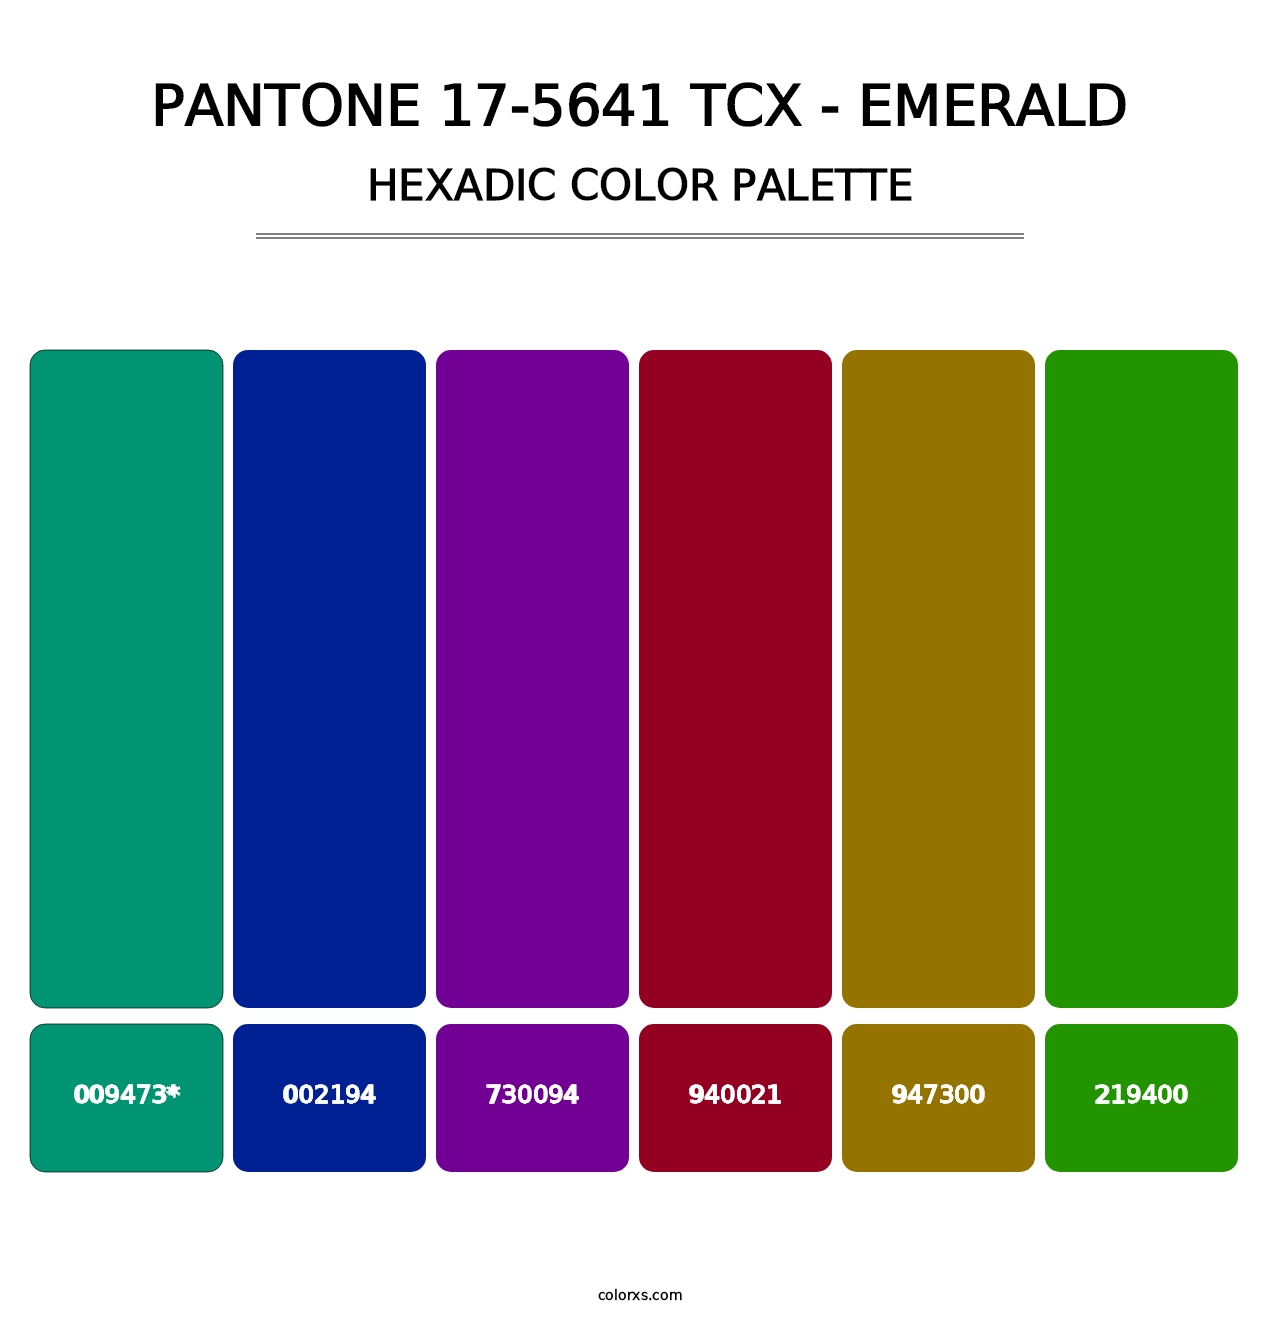 PANTONE 17-5641 TCX - Emerald - Hexadic Color Palette